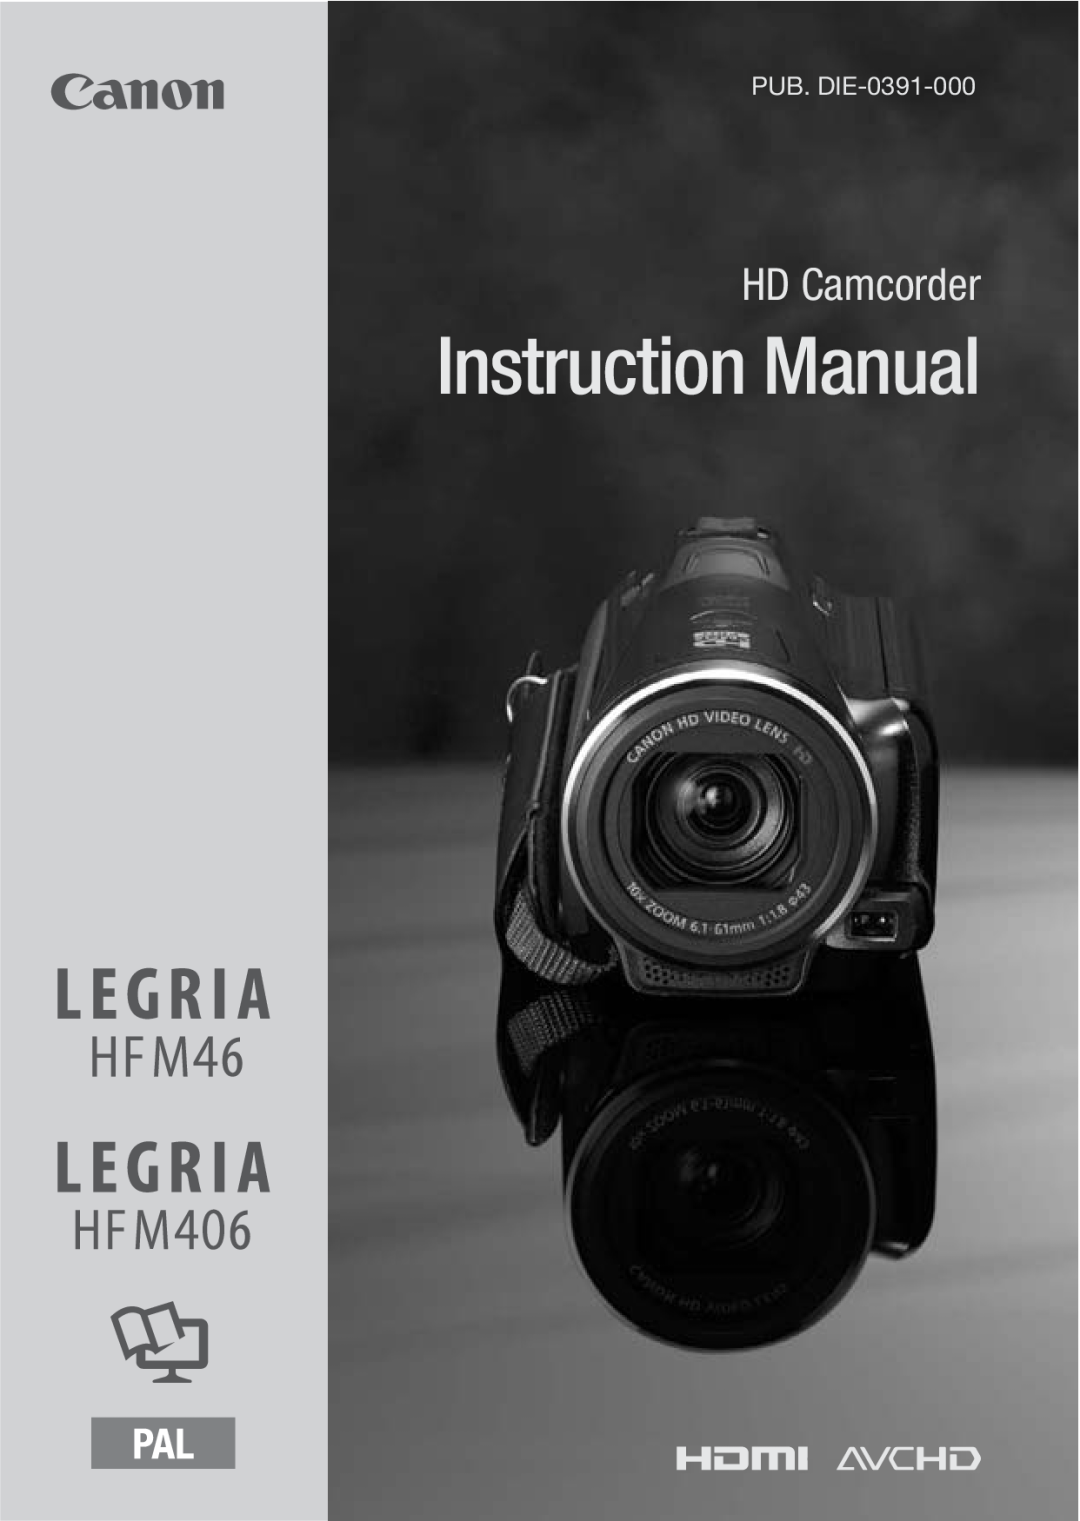 Canon HFM46, HFM406 instruction manual Instruction Manual, HD Camcorder, PUB. DIE-0391-000 